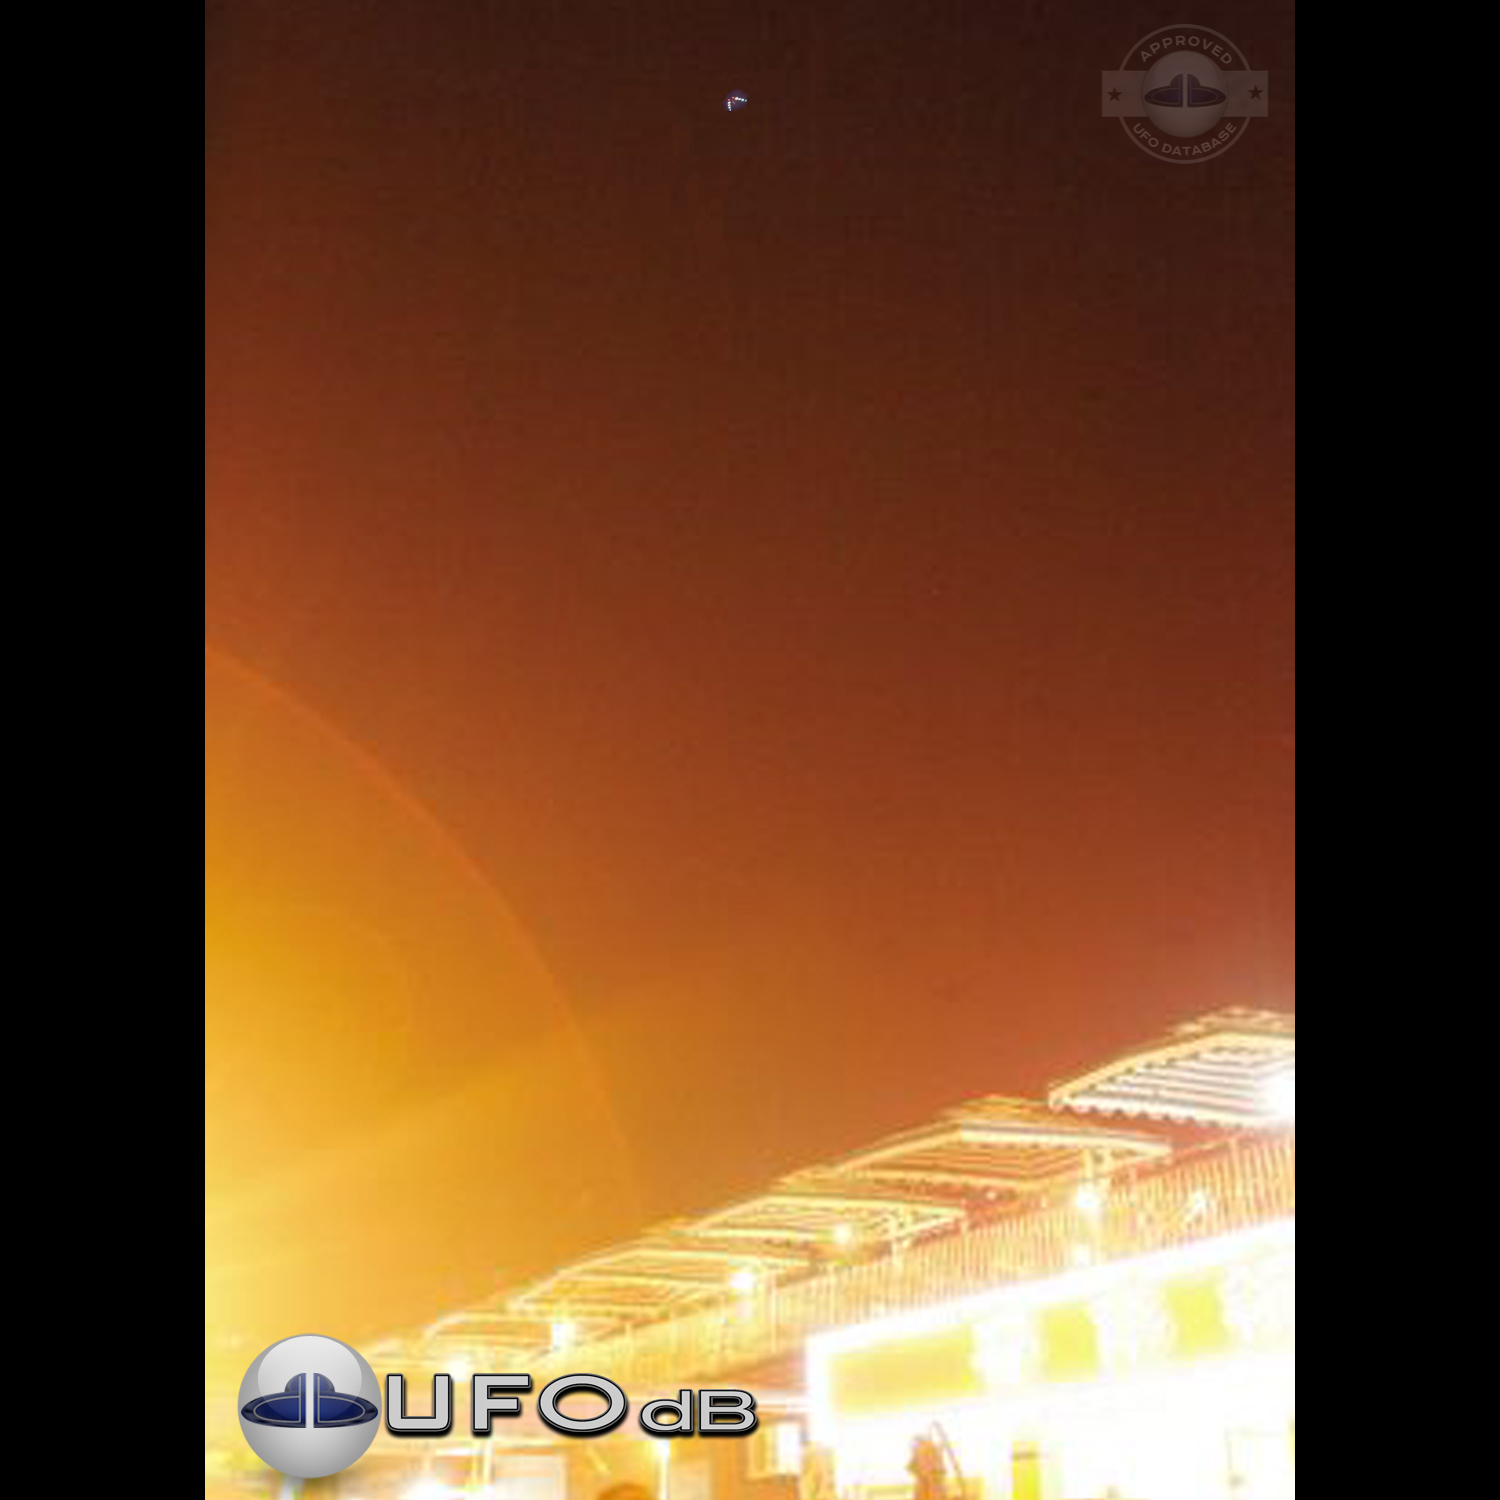 Mass UFO Sighting in China | Beibei Chongqing UFO picture | 2009 UFO Picture #168-1